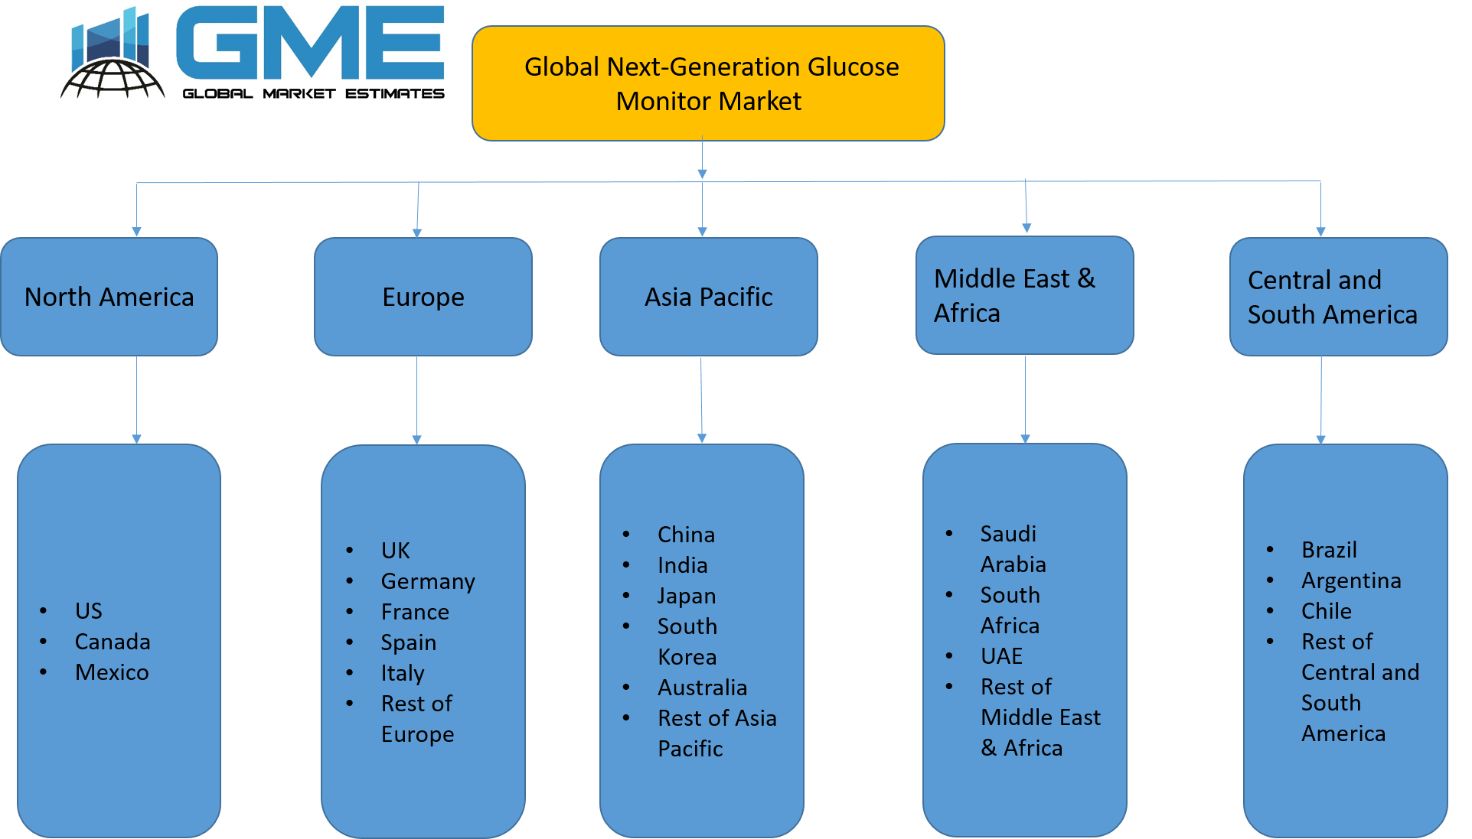 Global Next-Generation Glucose Monitor Market - Regional Analysis